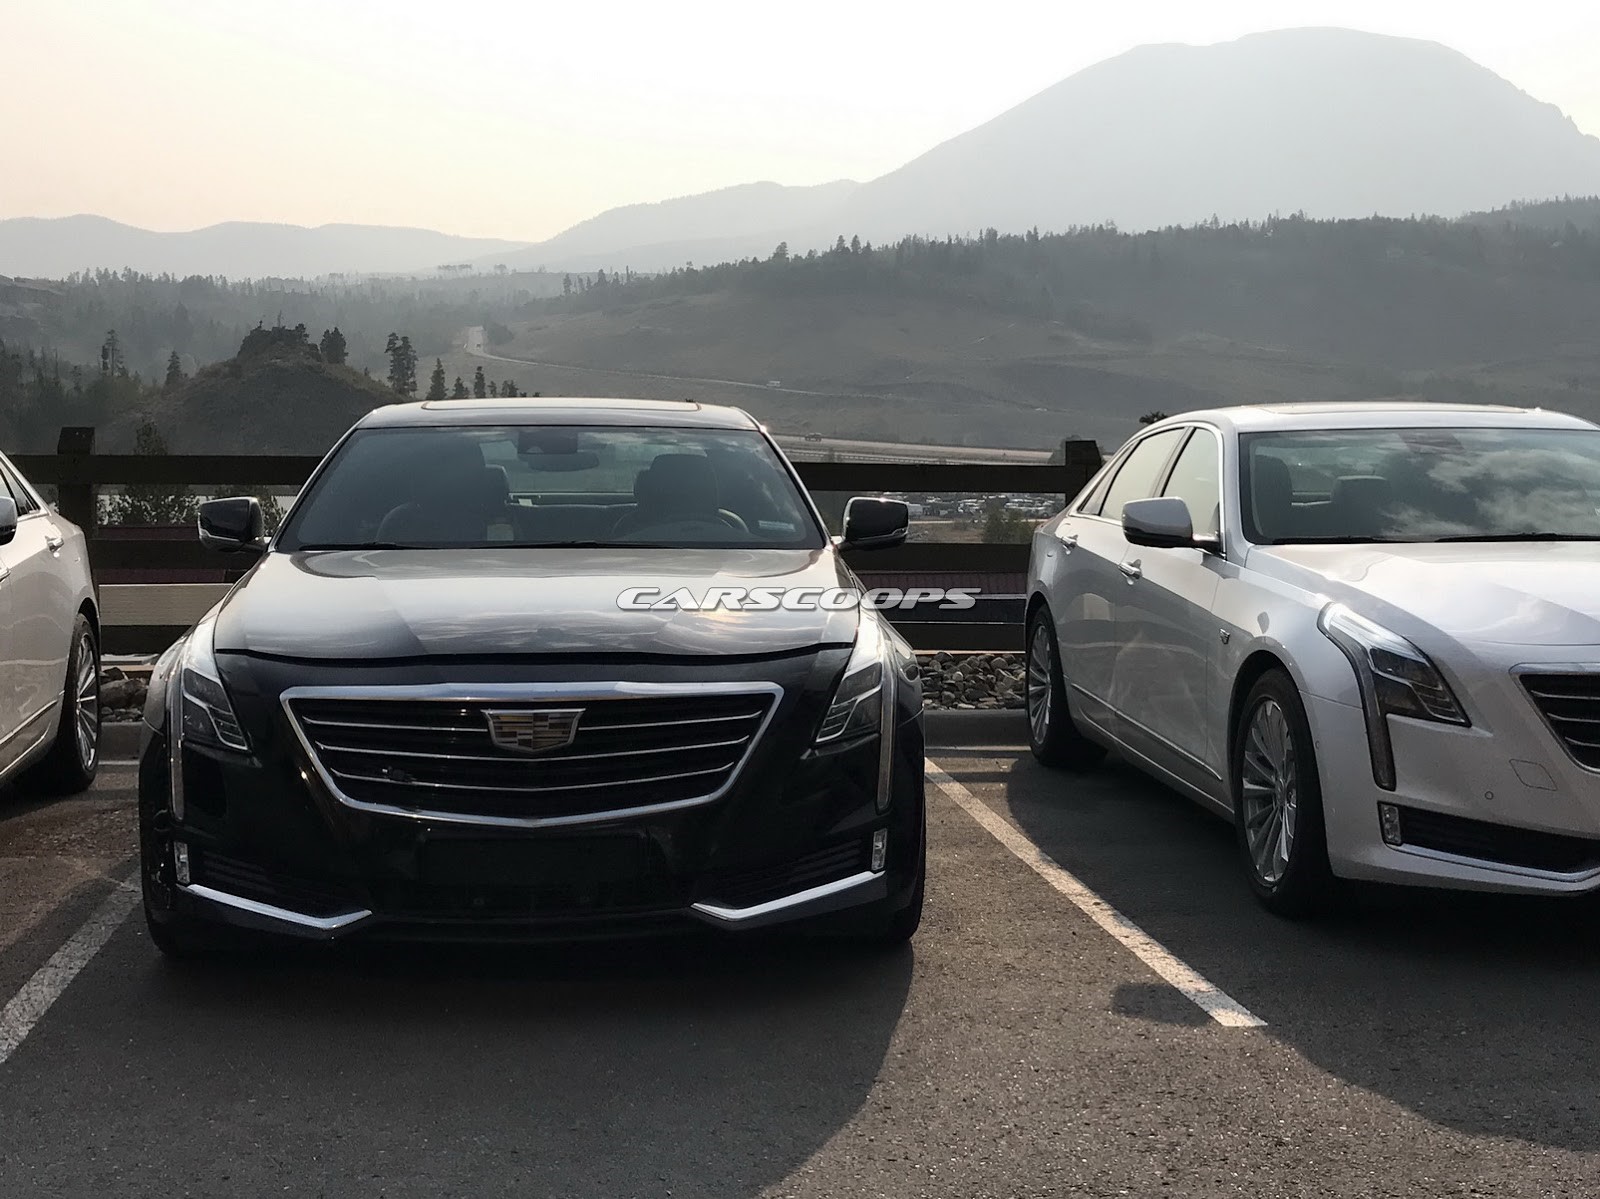 2019 Cadillac line-up (spy shot) .